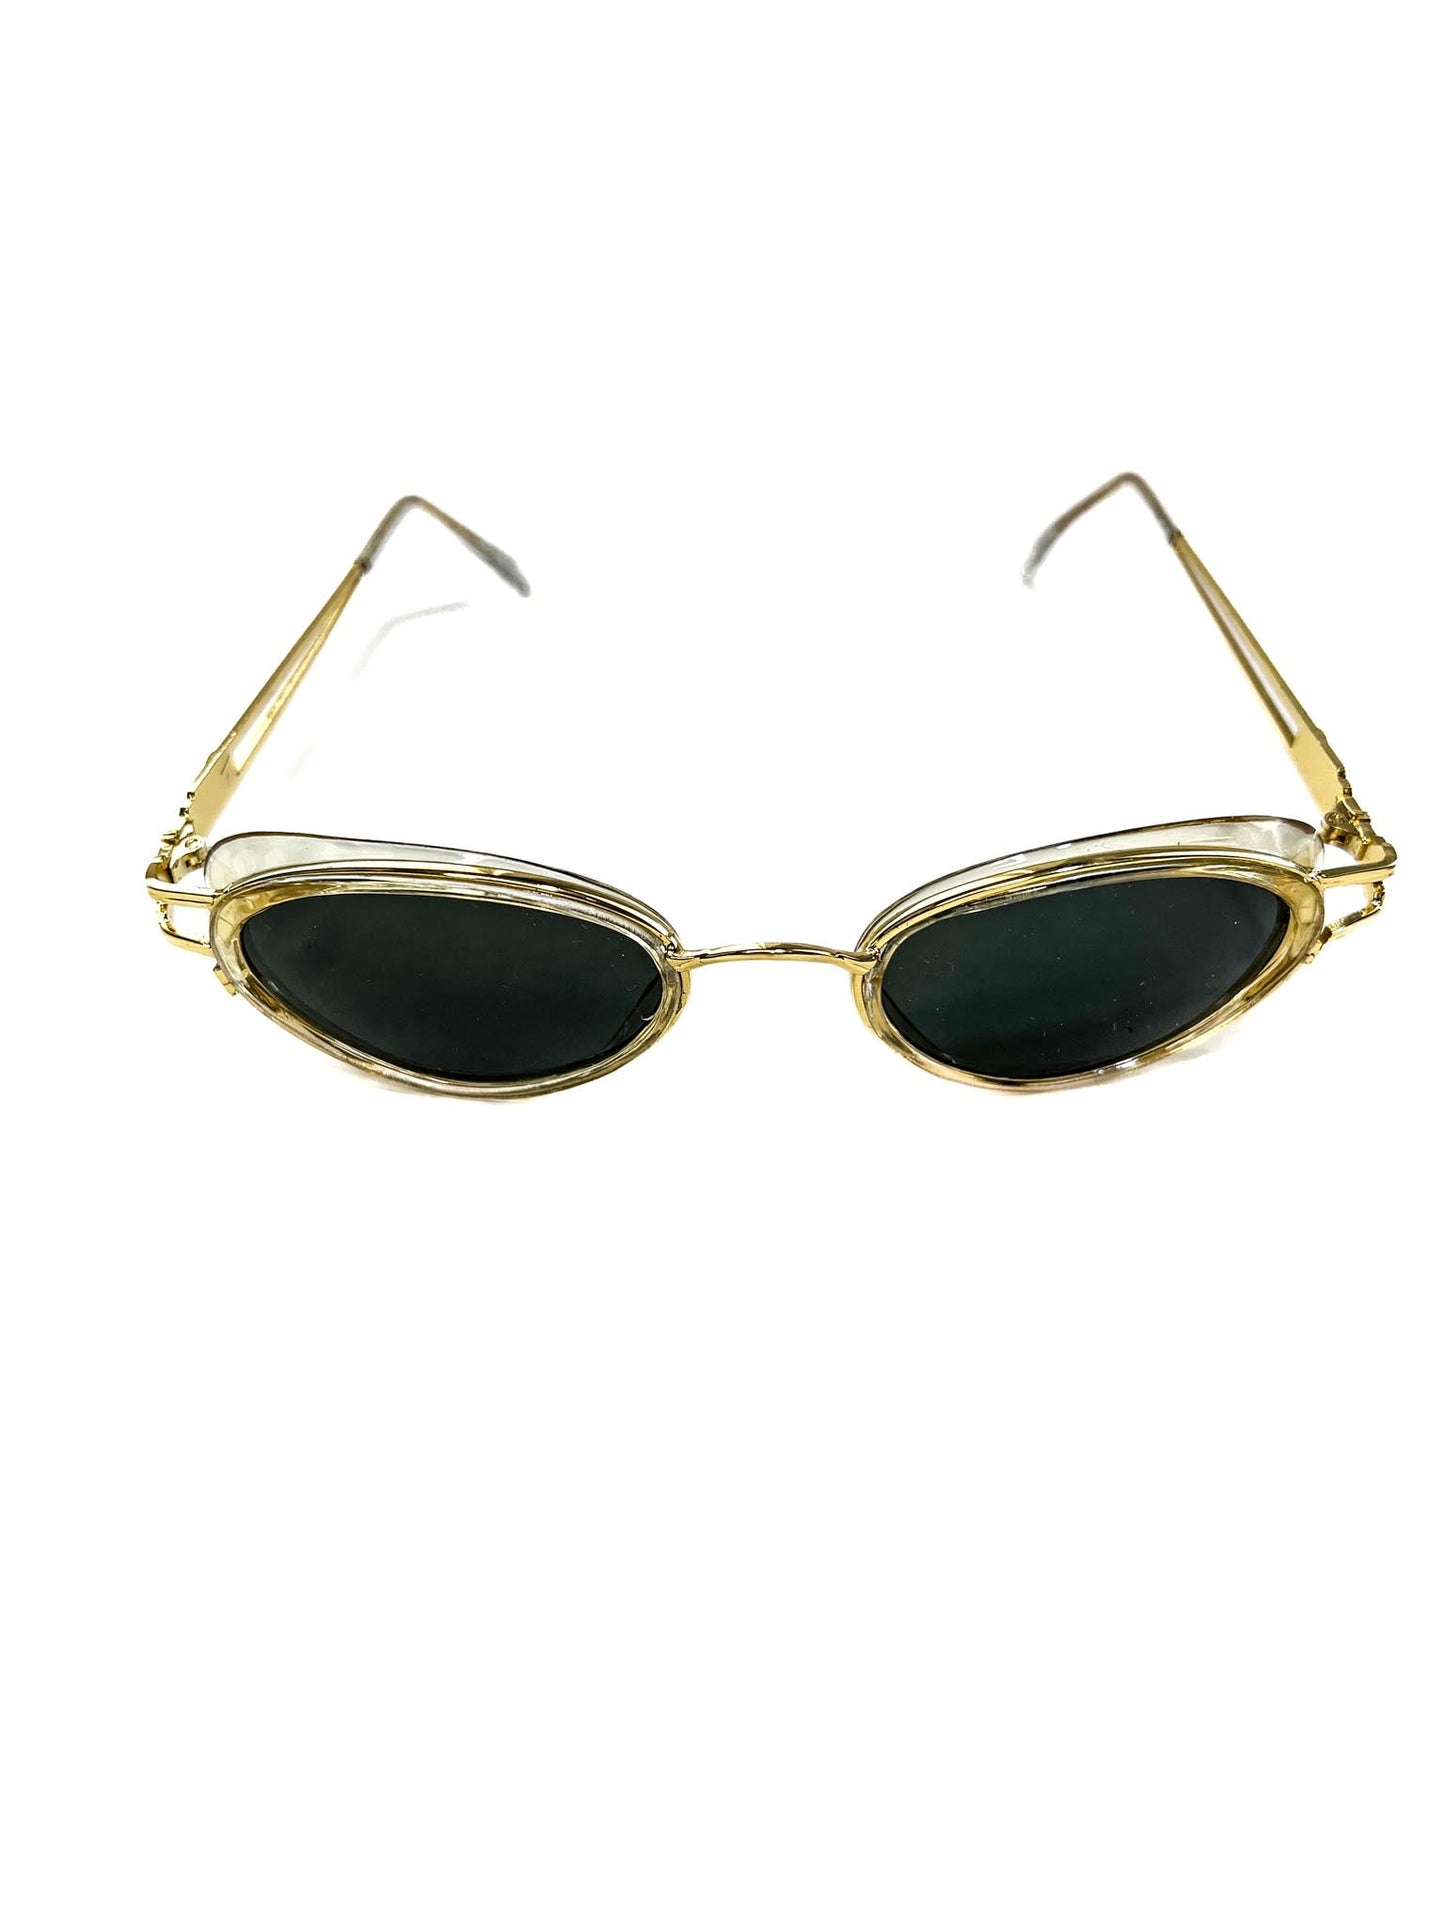 SX Oval retro gold and clear sunglasses